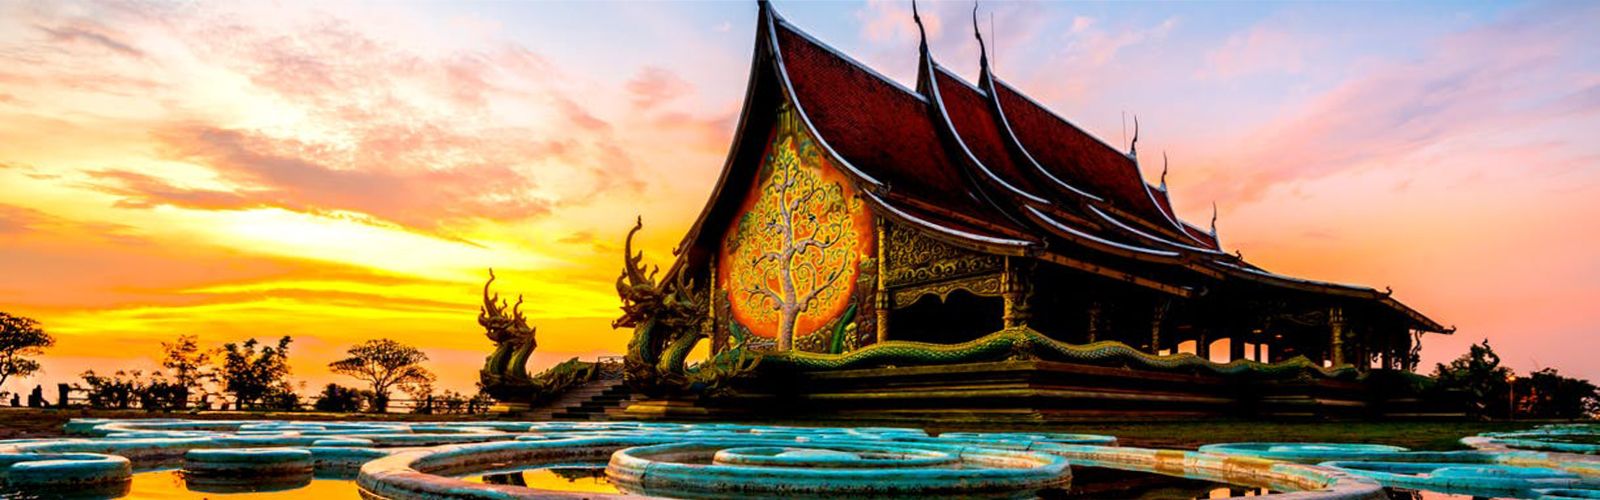 Ubon Ratchathani Travel Guide | Asianventure Tours